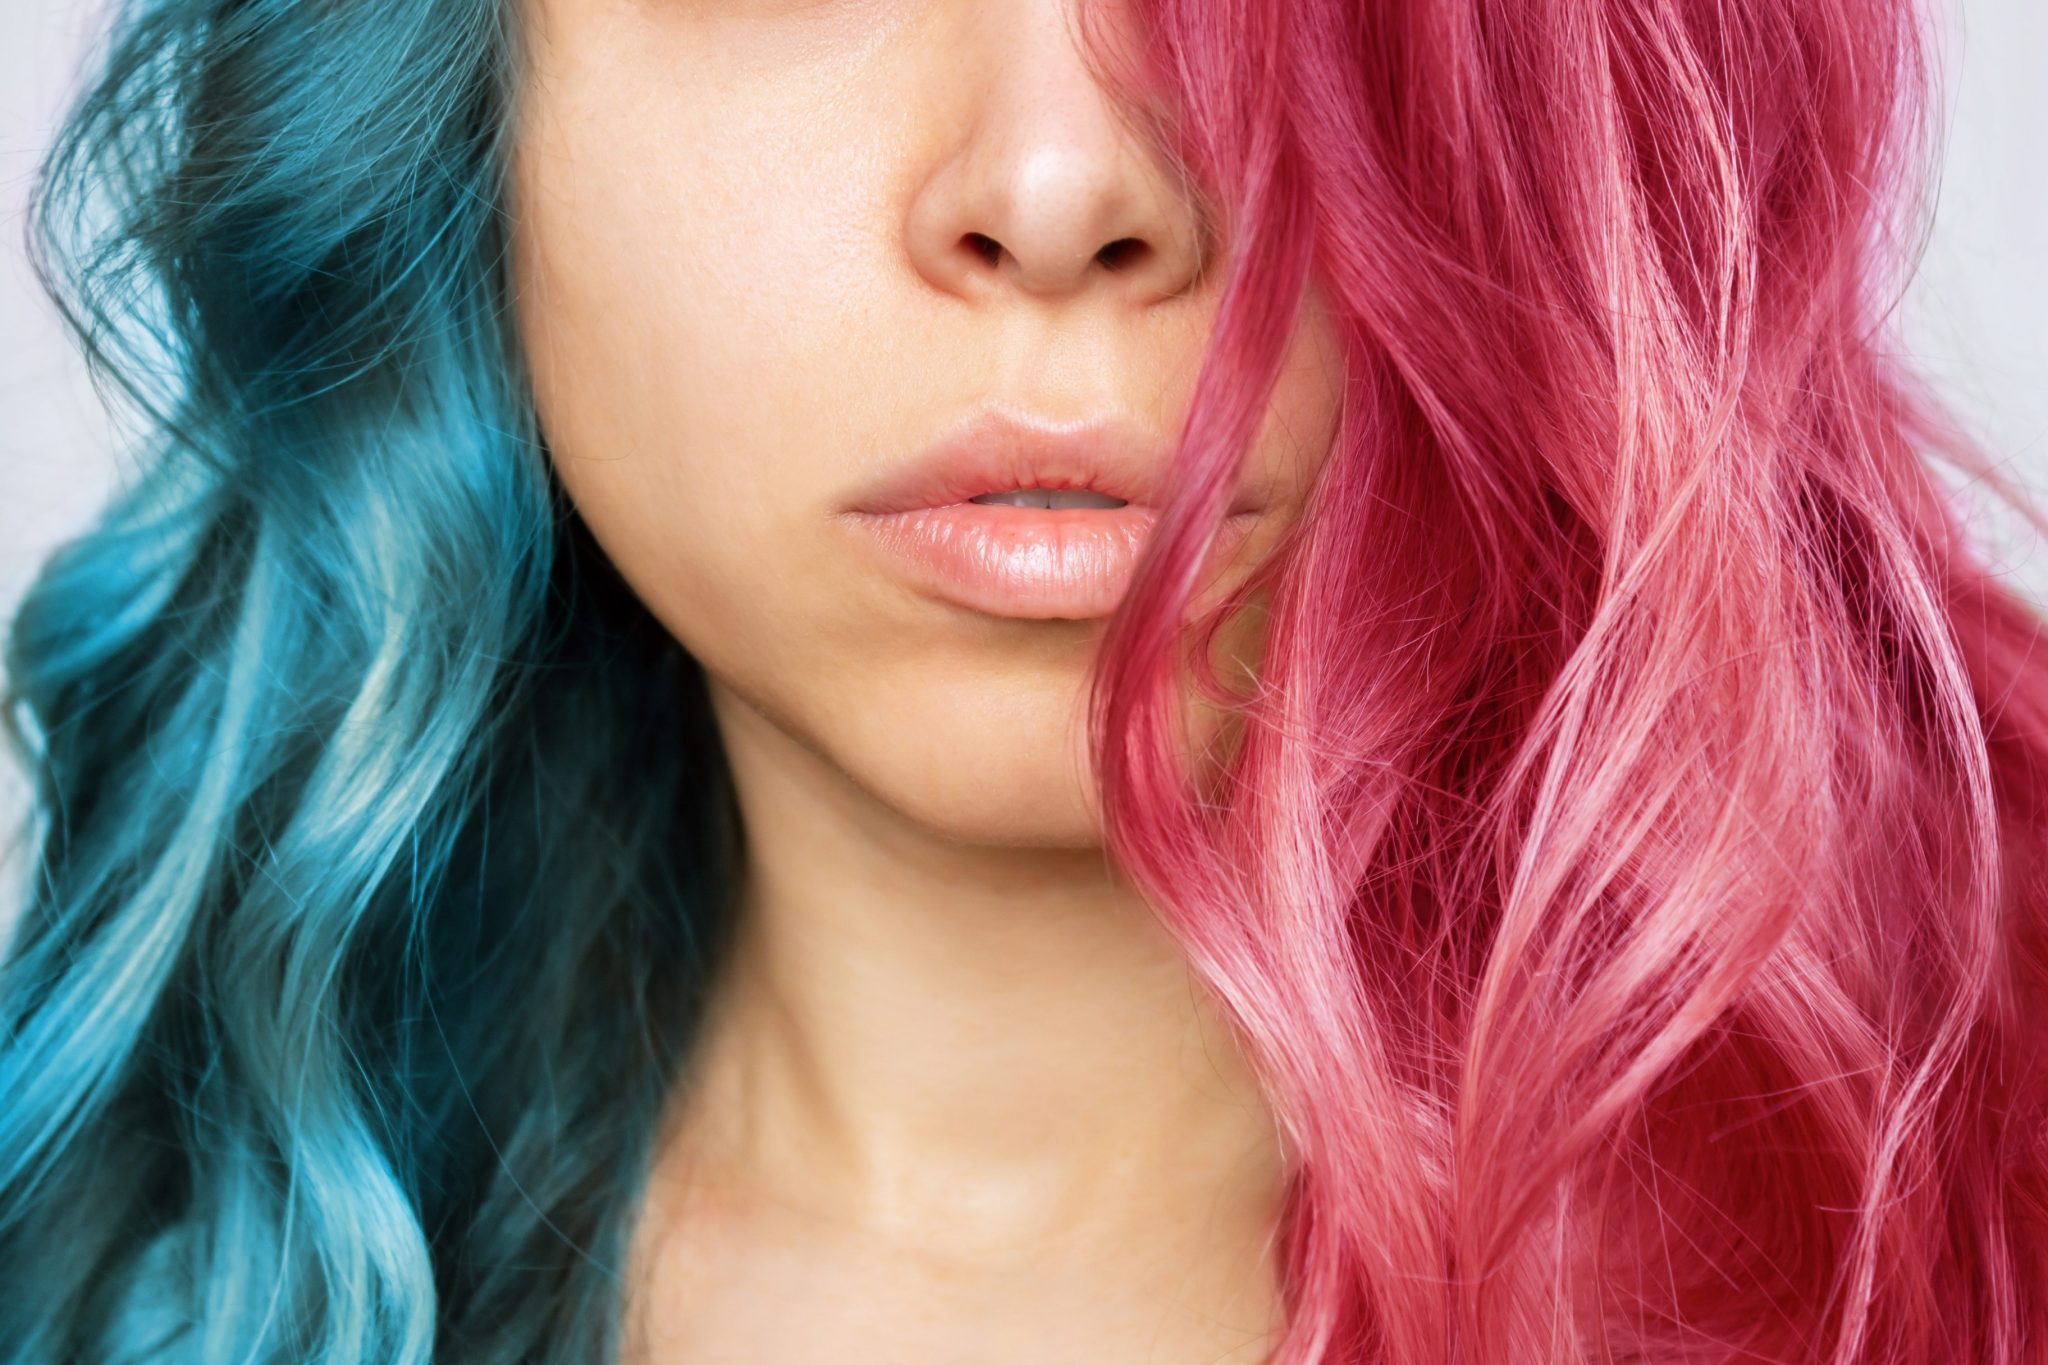 3. "Bottom Half Blue Hair Inspiration" - wide 3